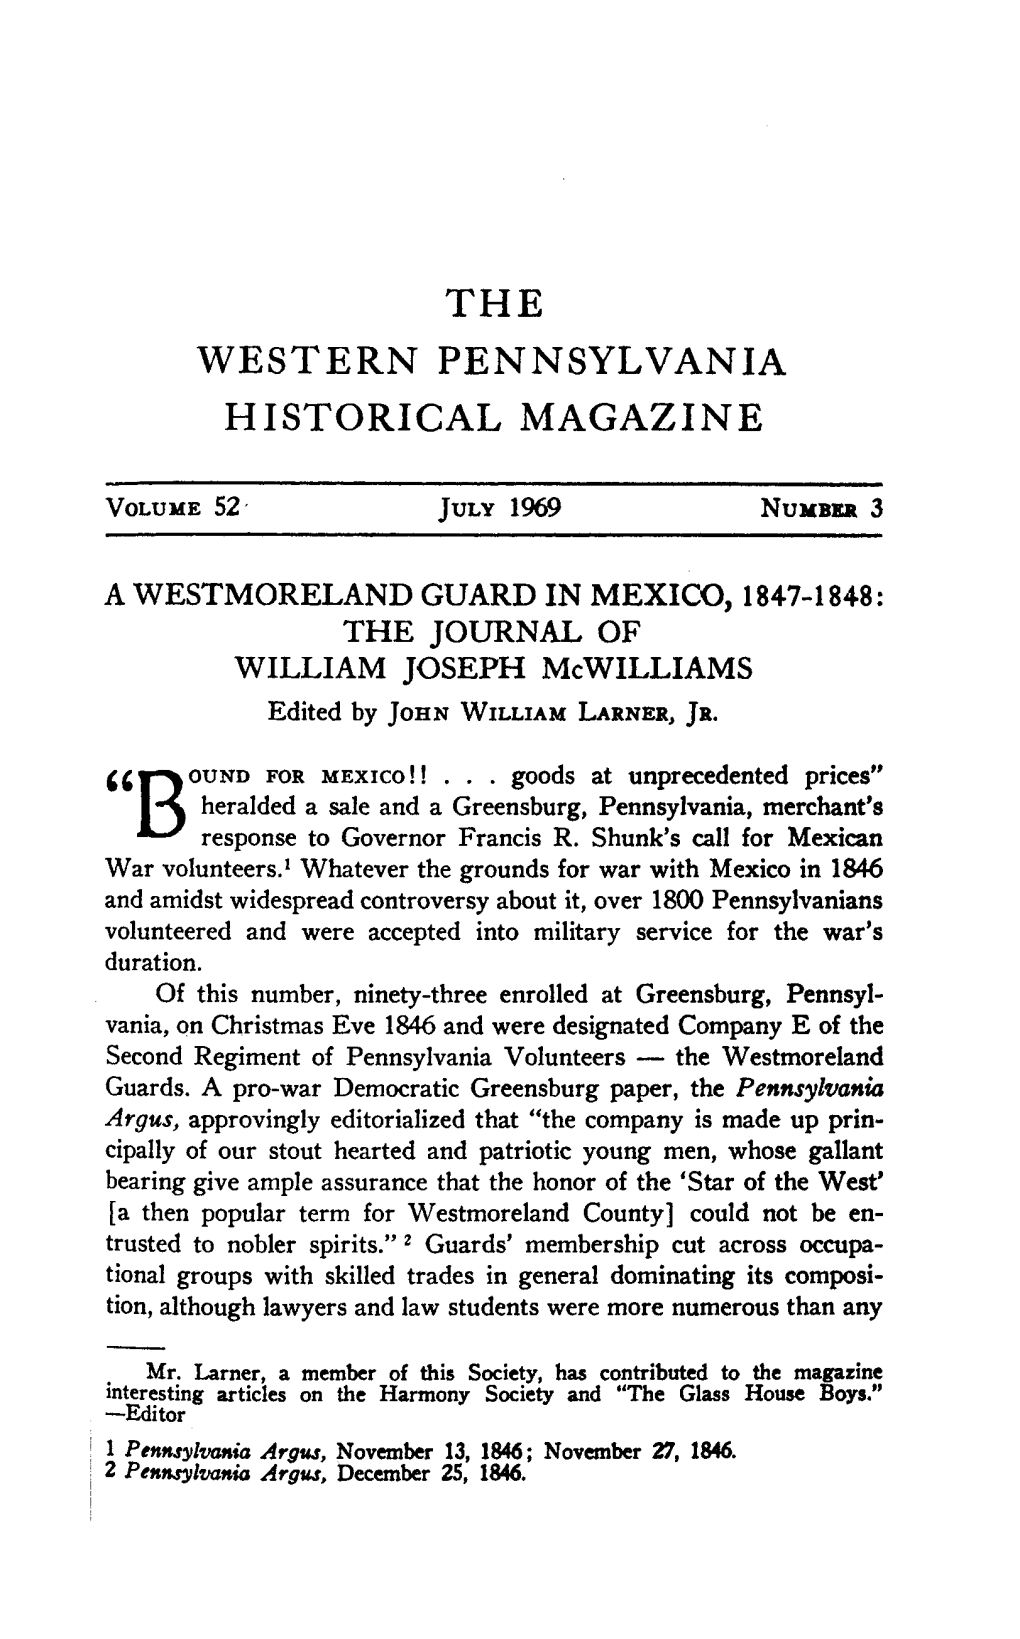 Western Pennsylvania Historical Magazine The